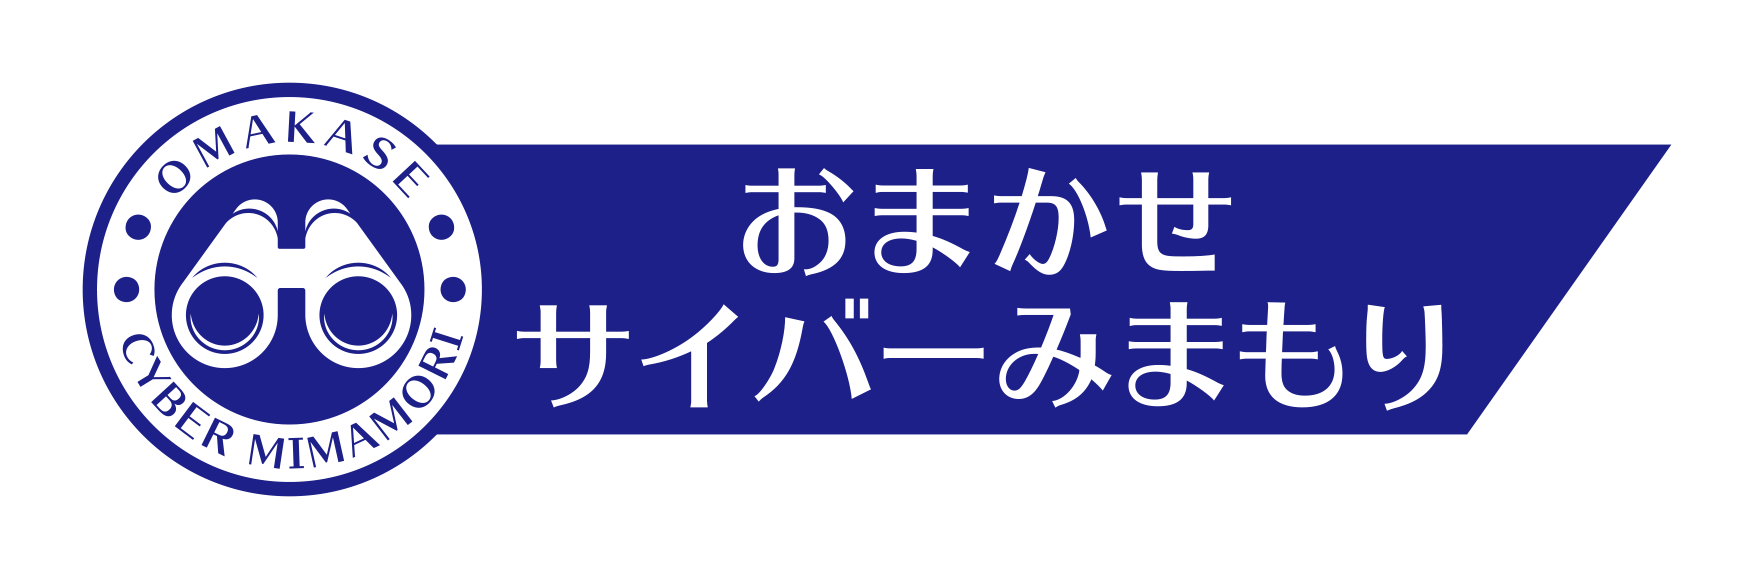 NTT東日本「おまかせサイバー見守り」